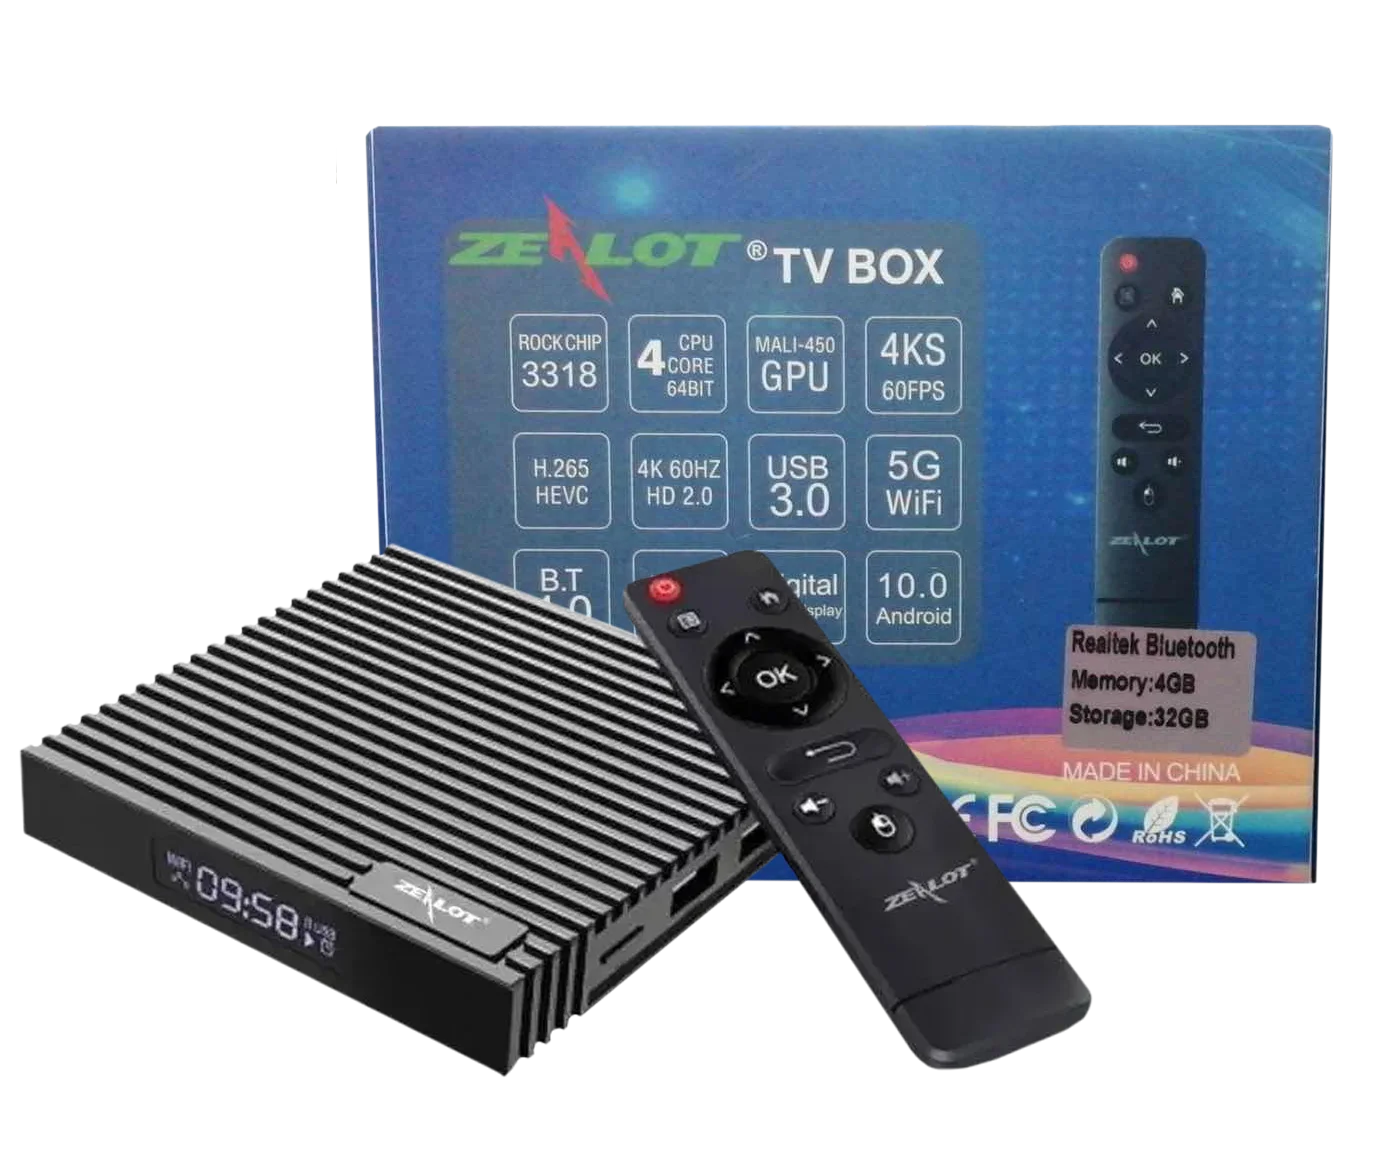 TV BOX Zerlot 4gb RAM WiFi 5G